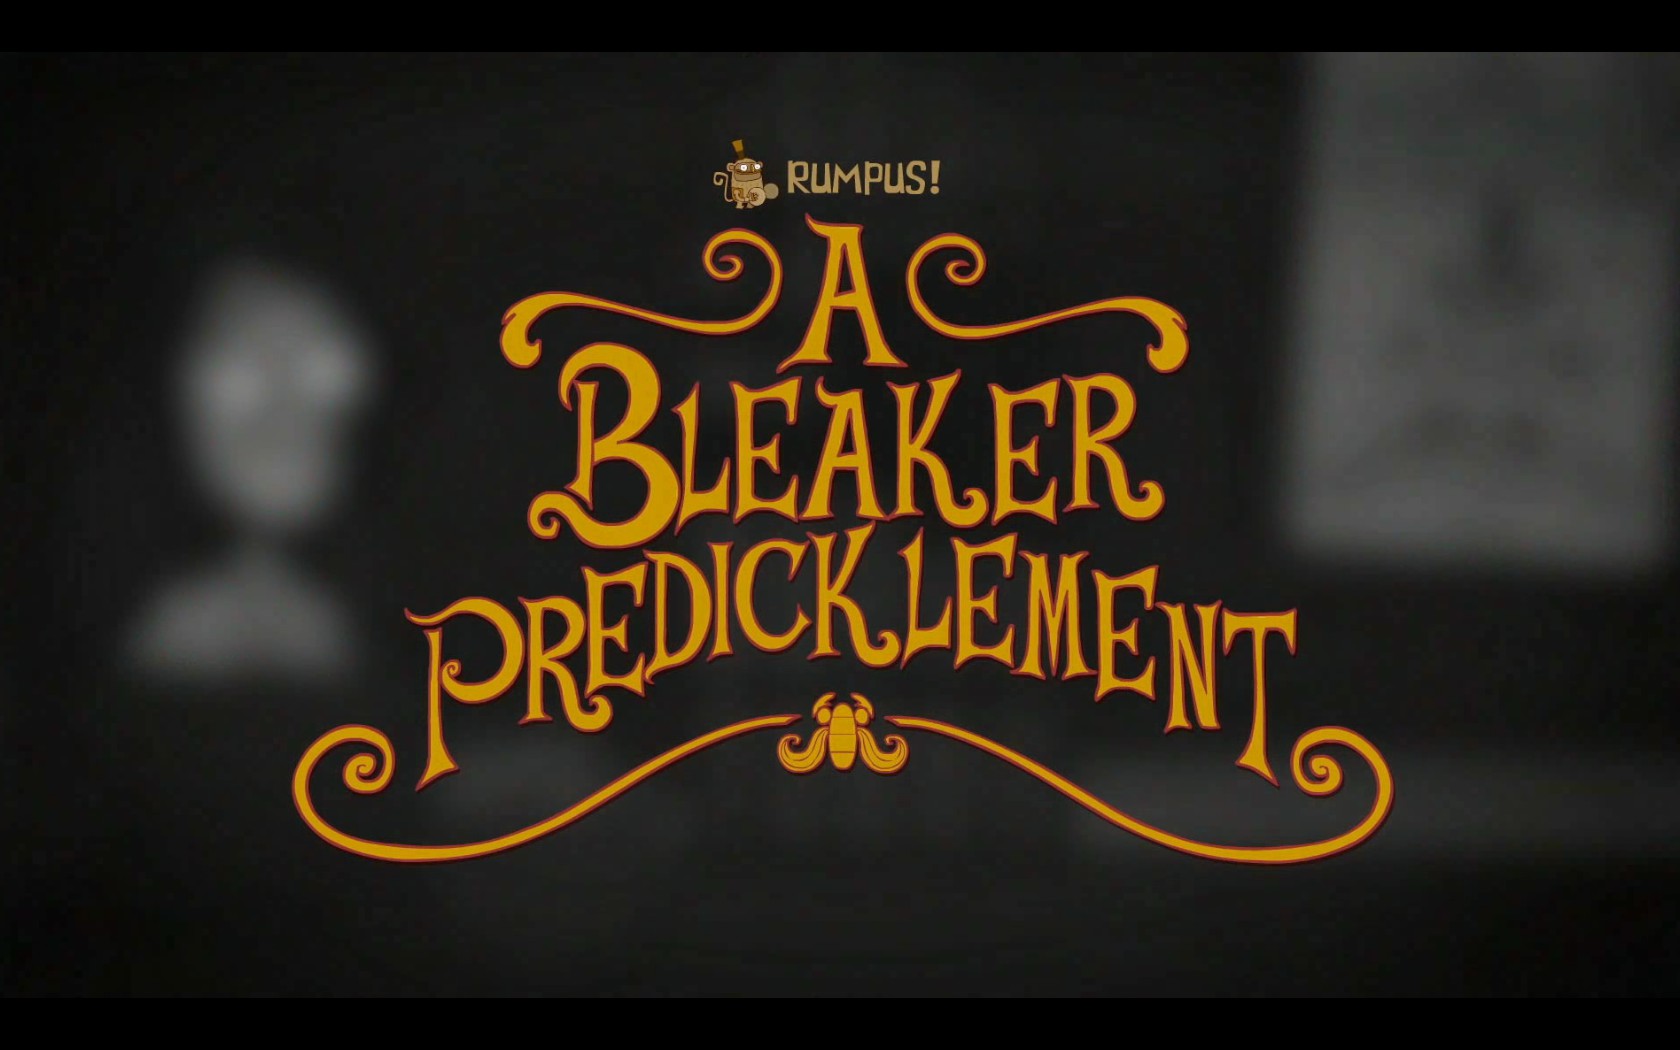 Bertram Fiddle 2: A Bleaker Predicklement